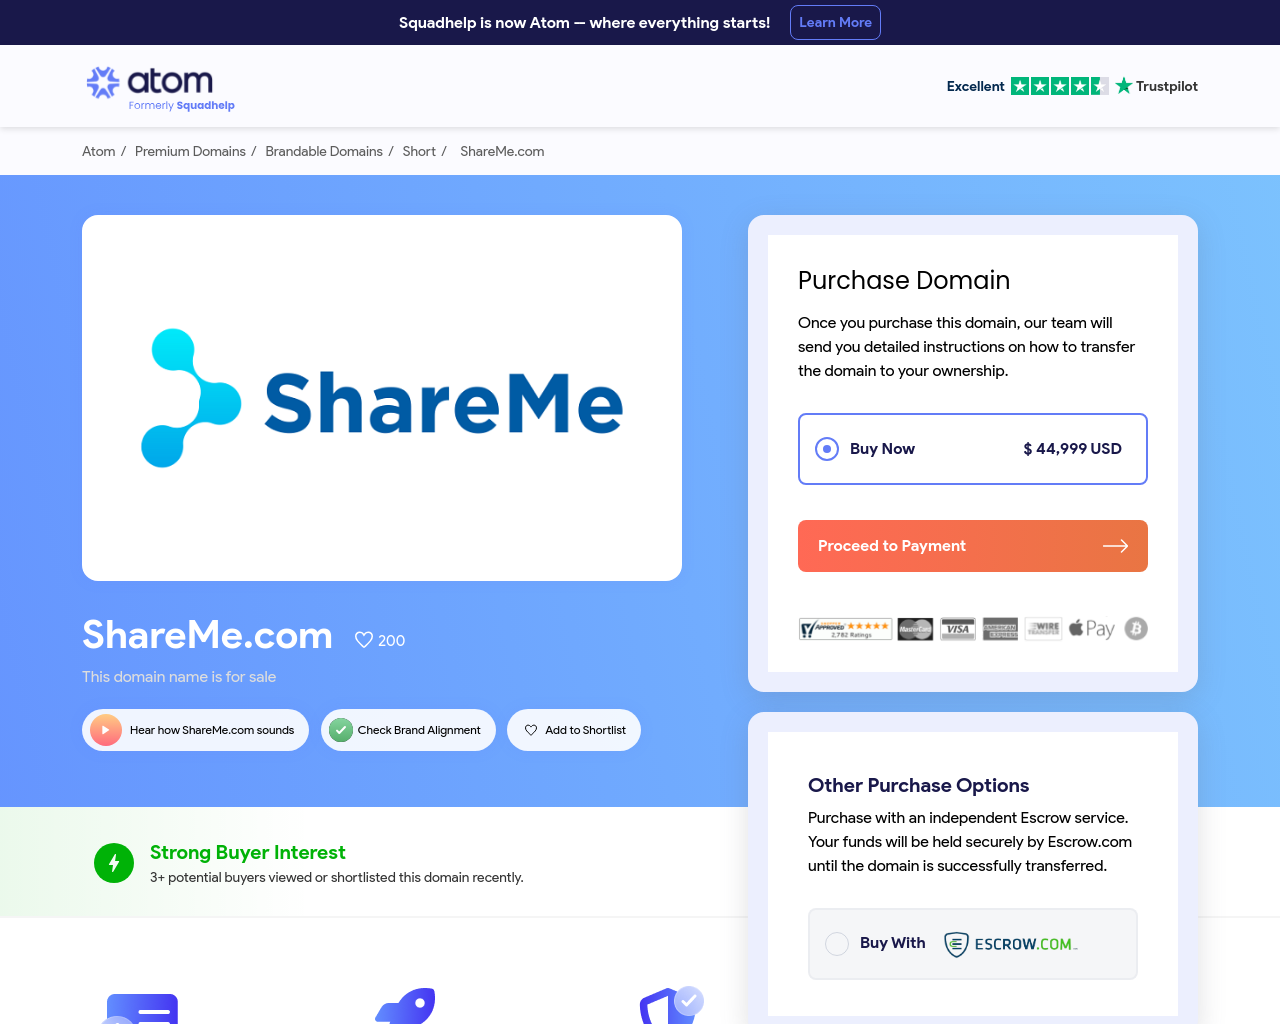 shareme.com